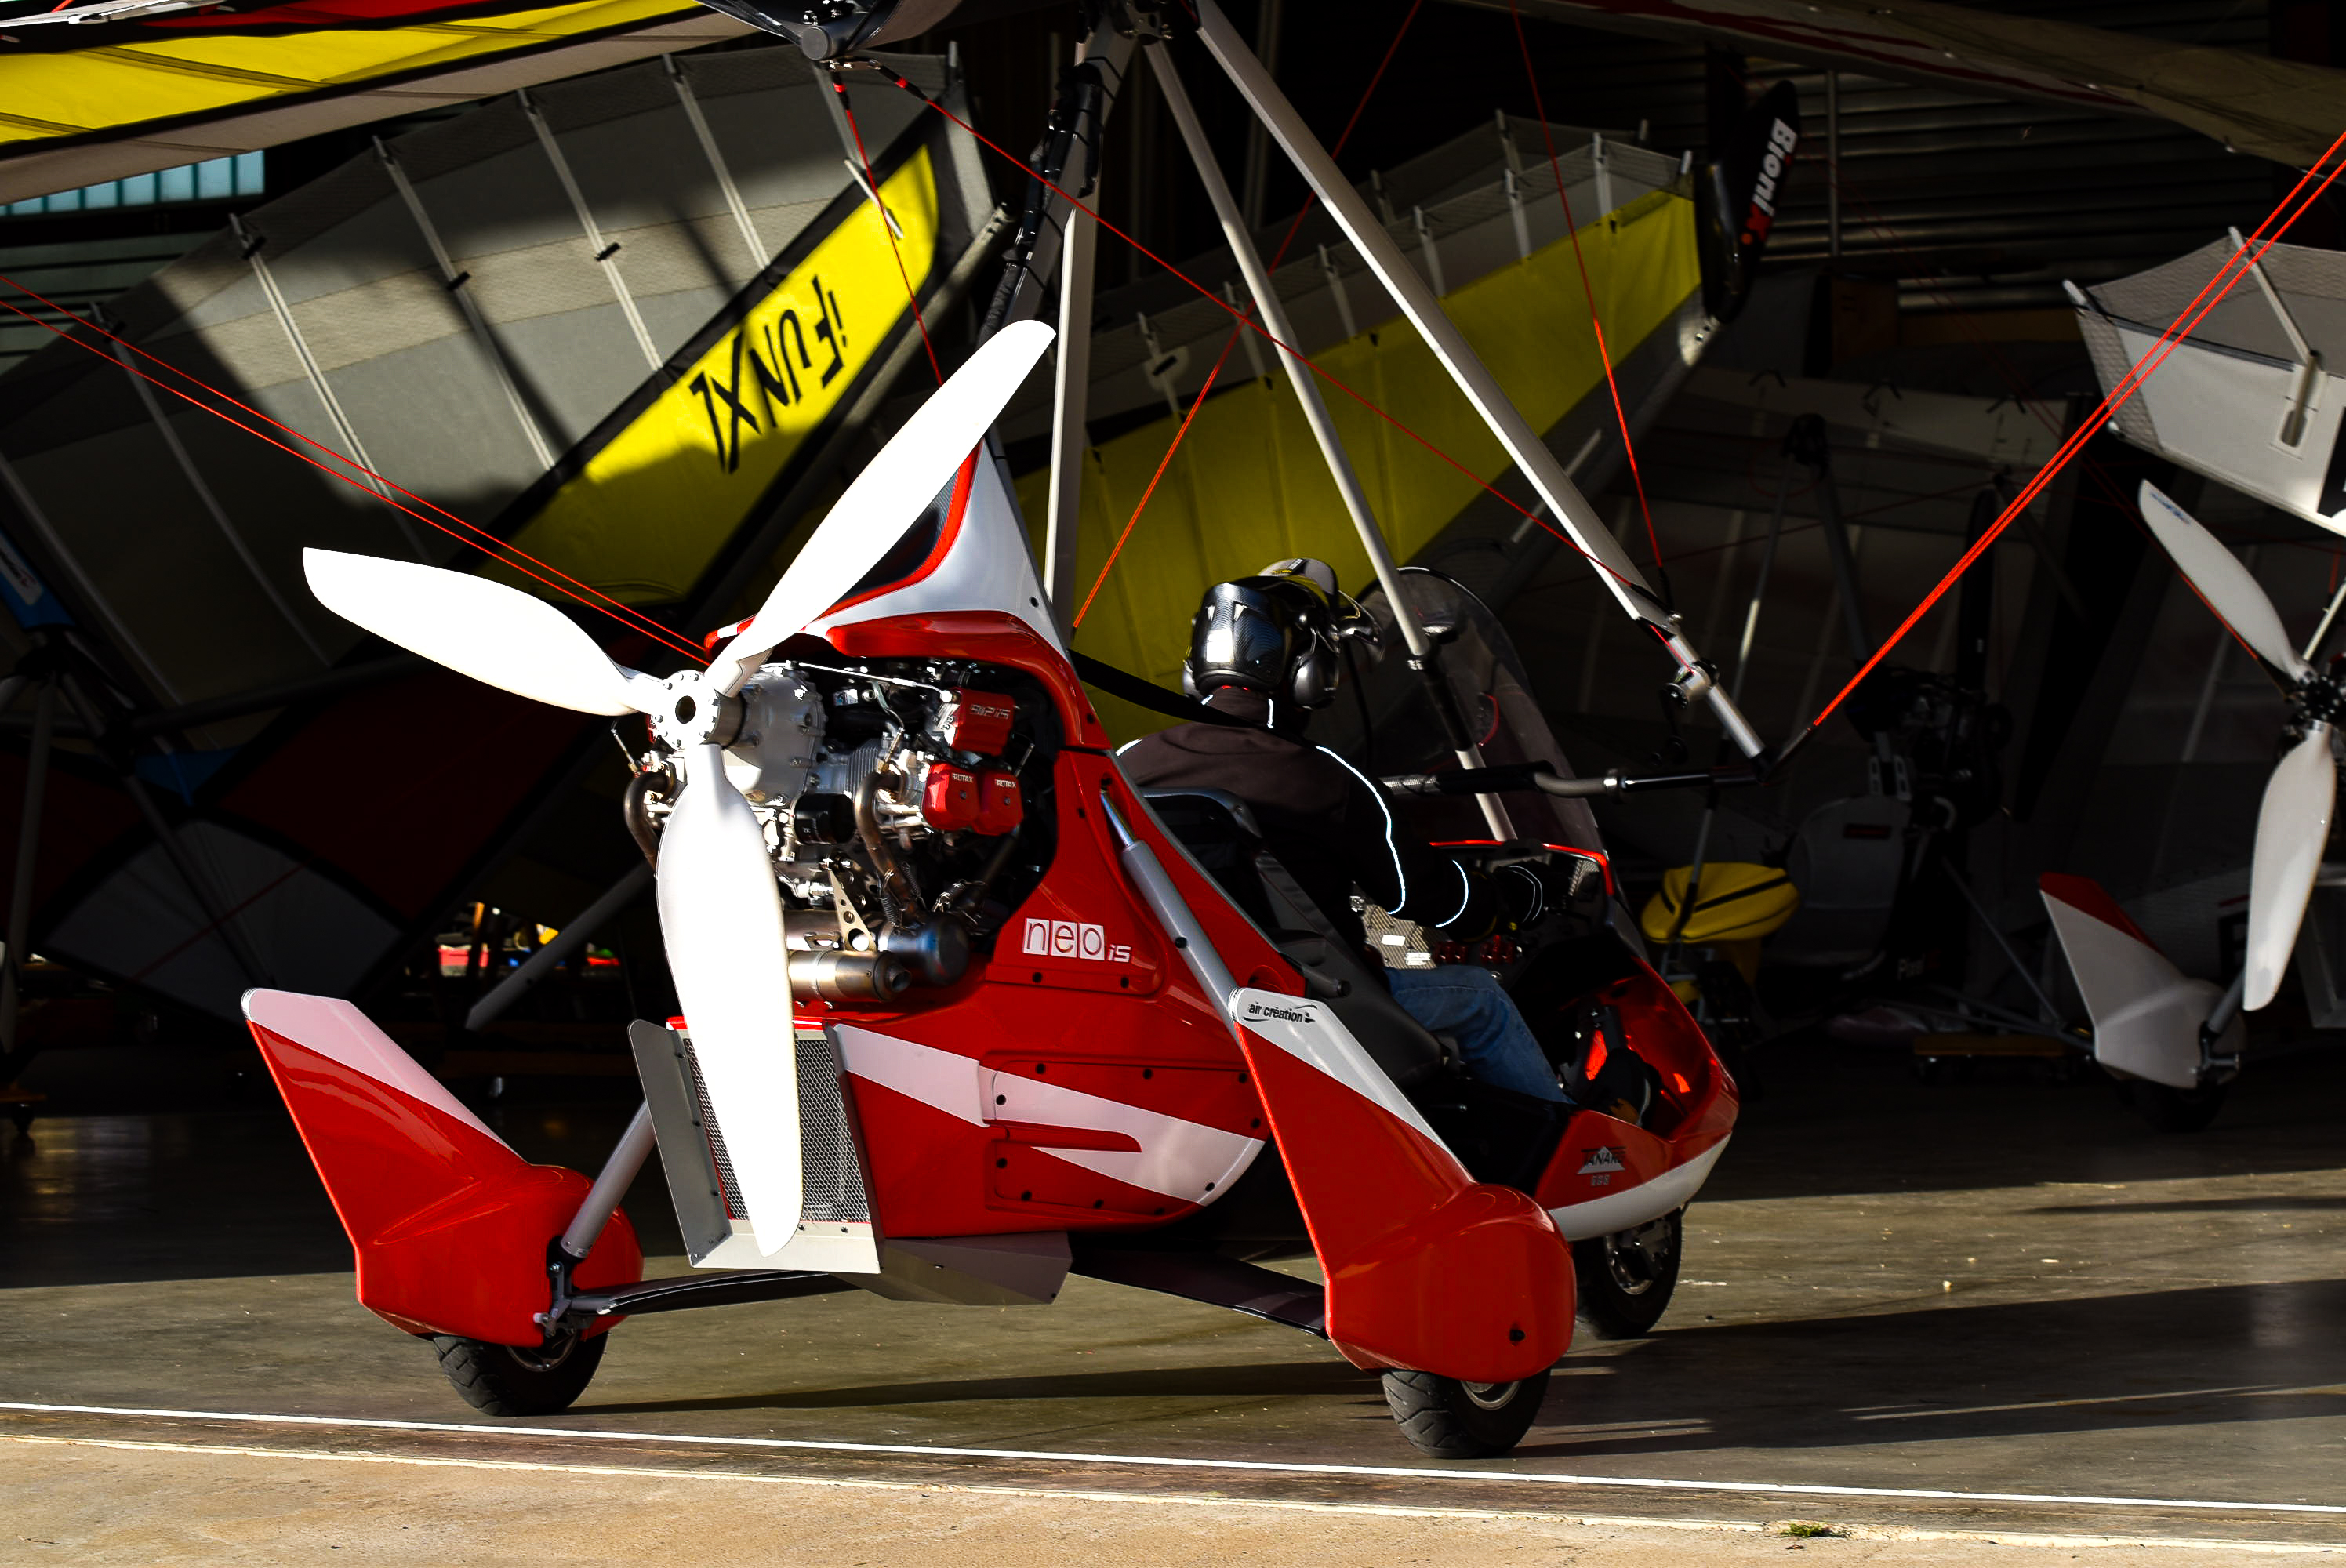 fly/lifestyle-binox2-tanarg-neo-lifestyle-ulm-pendulaire-ultralight-trike-wings-1-2.jpg